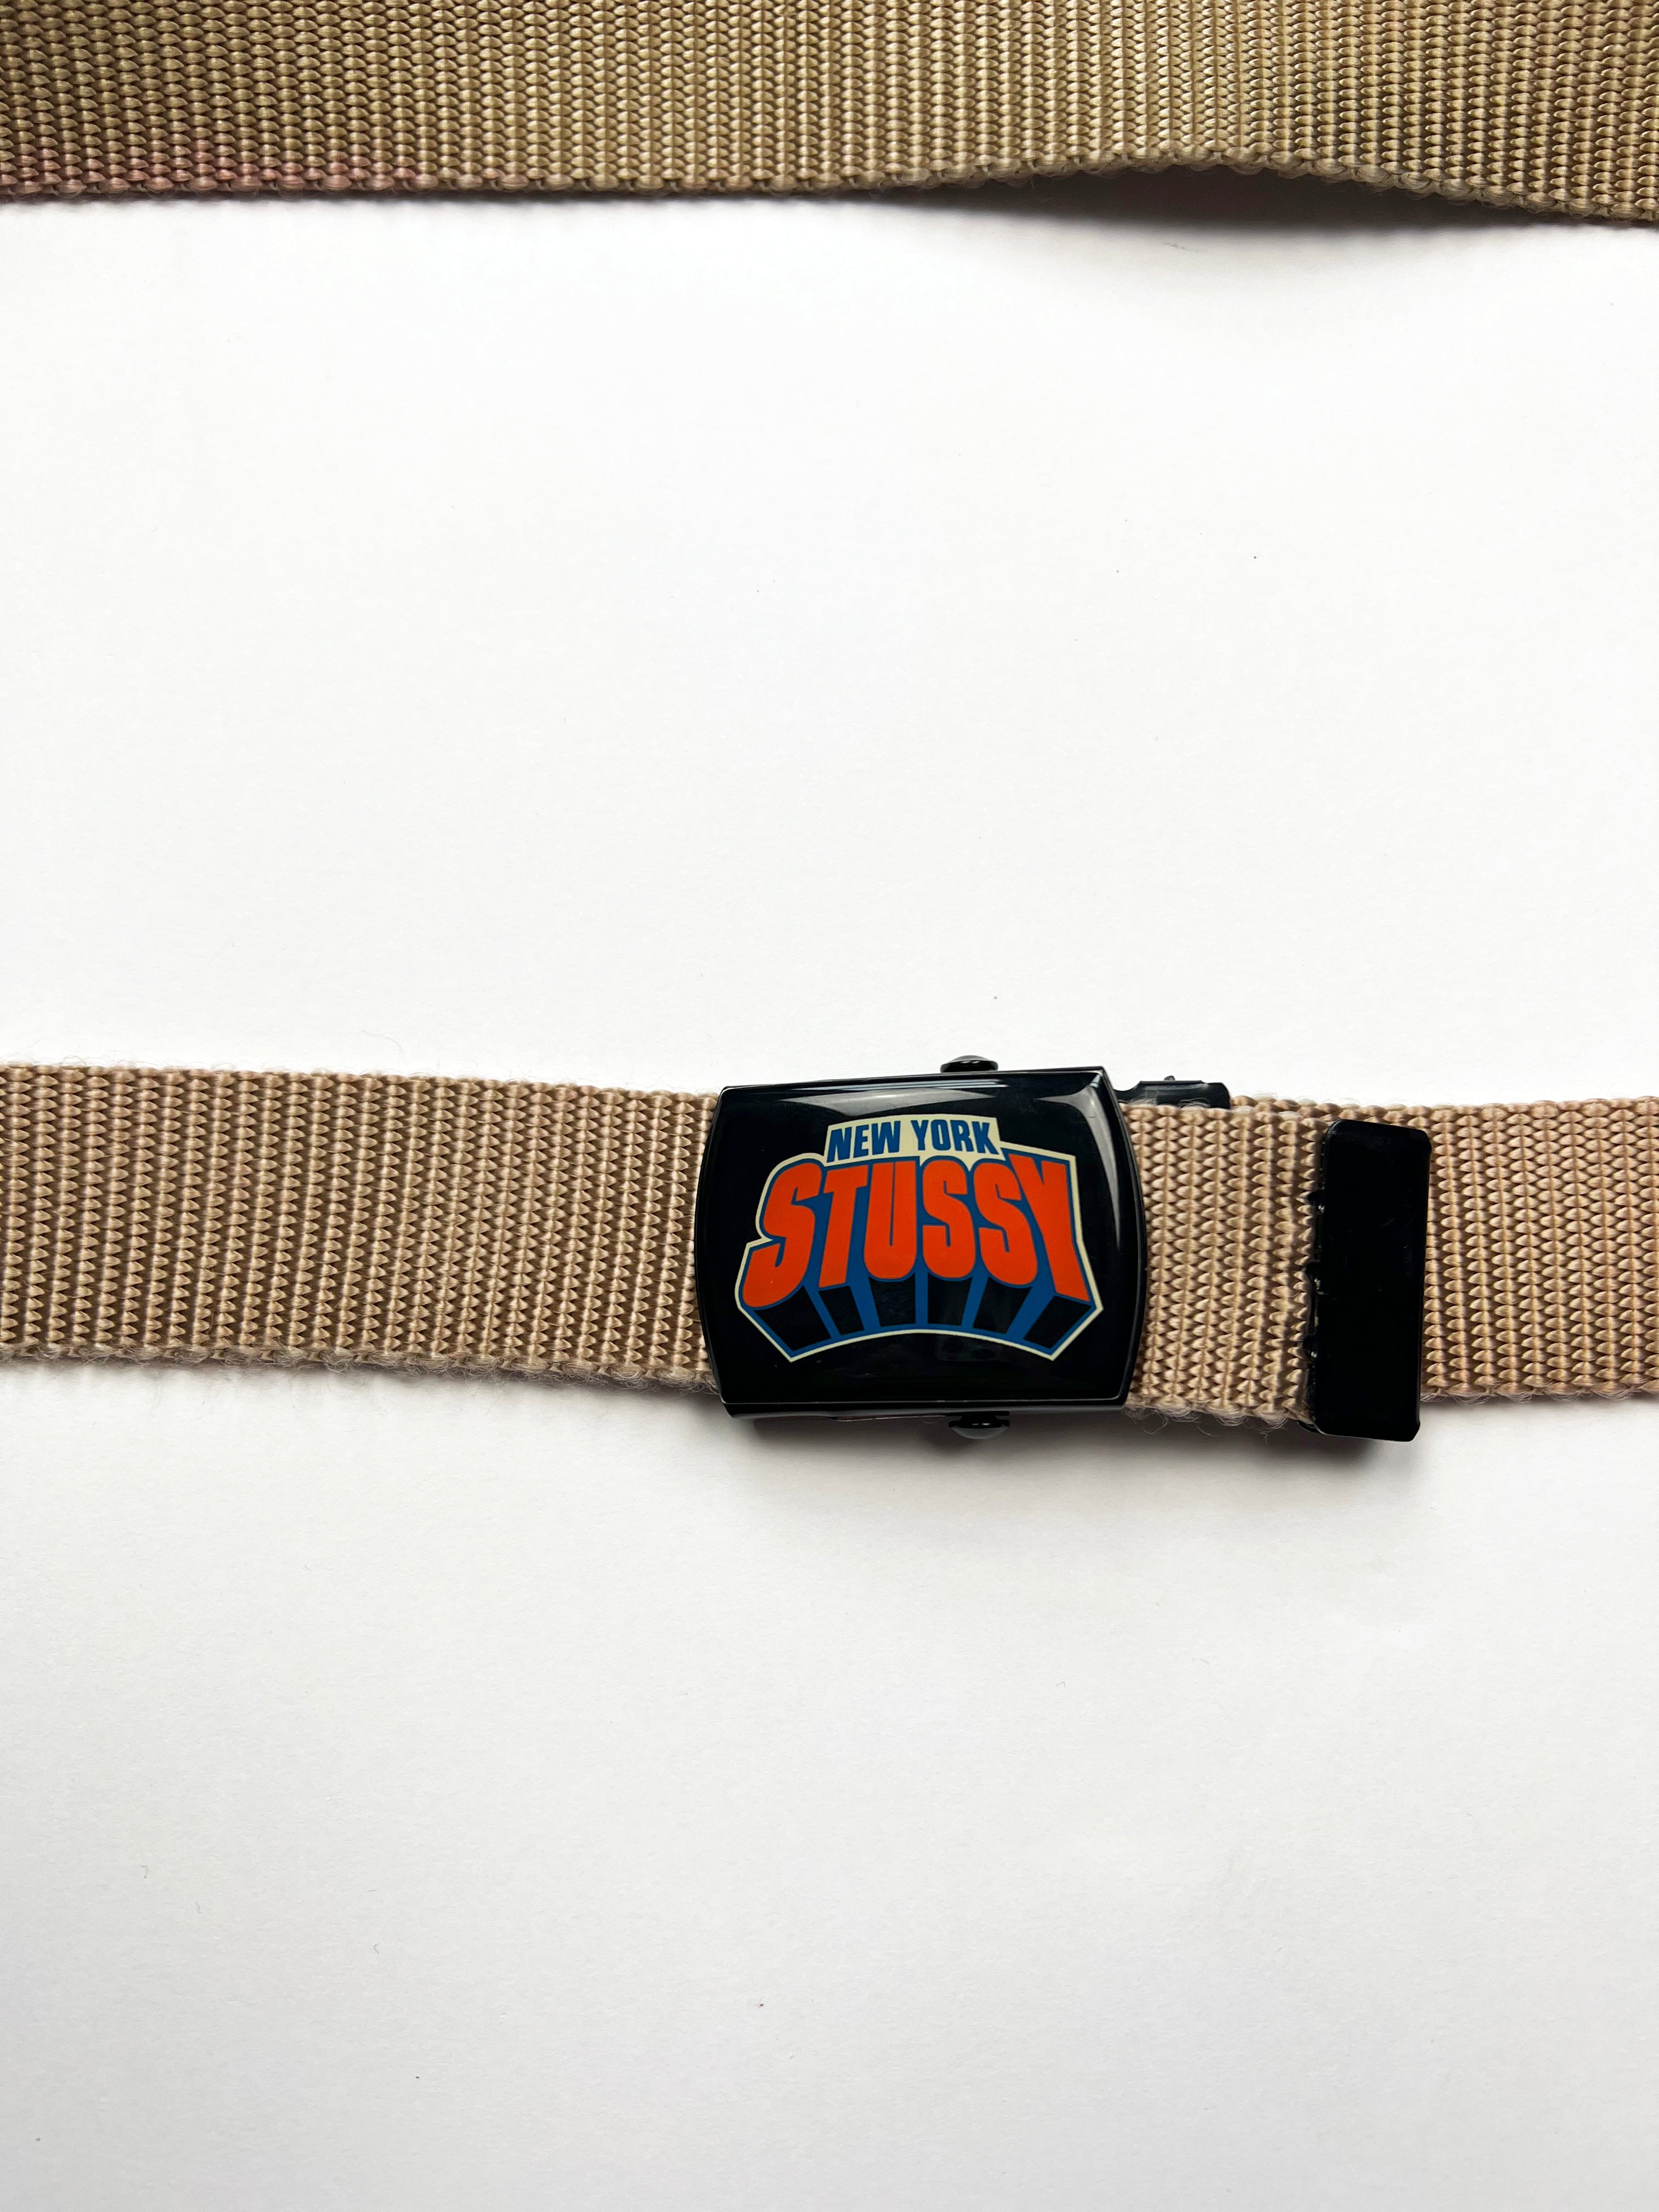 Stussy New York 'Knicks' Belt 2000